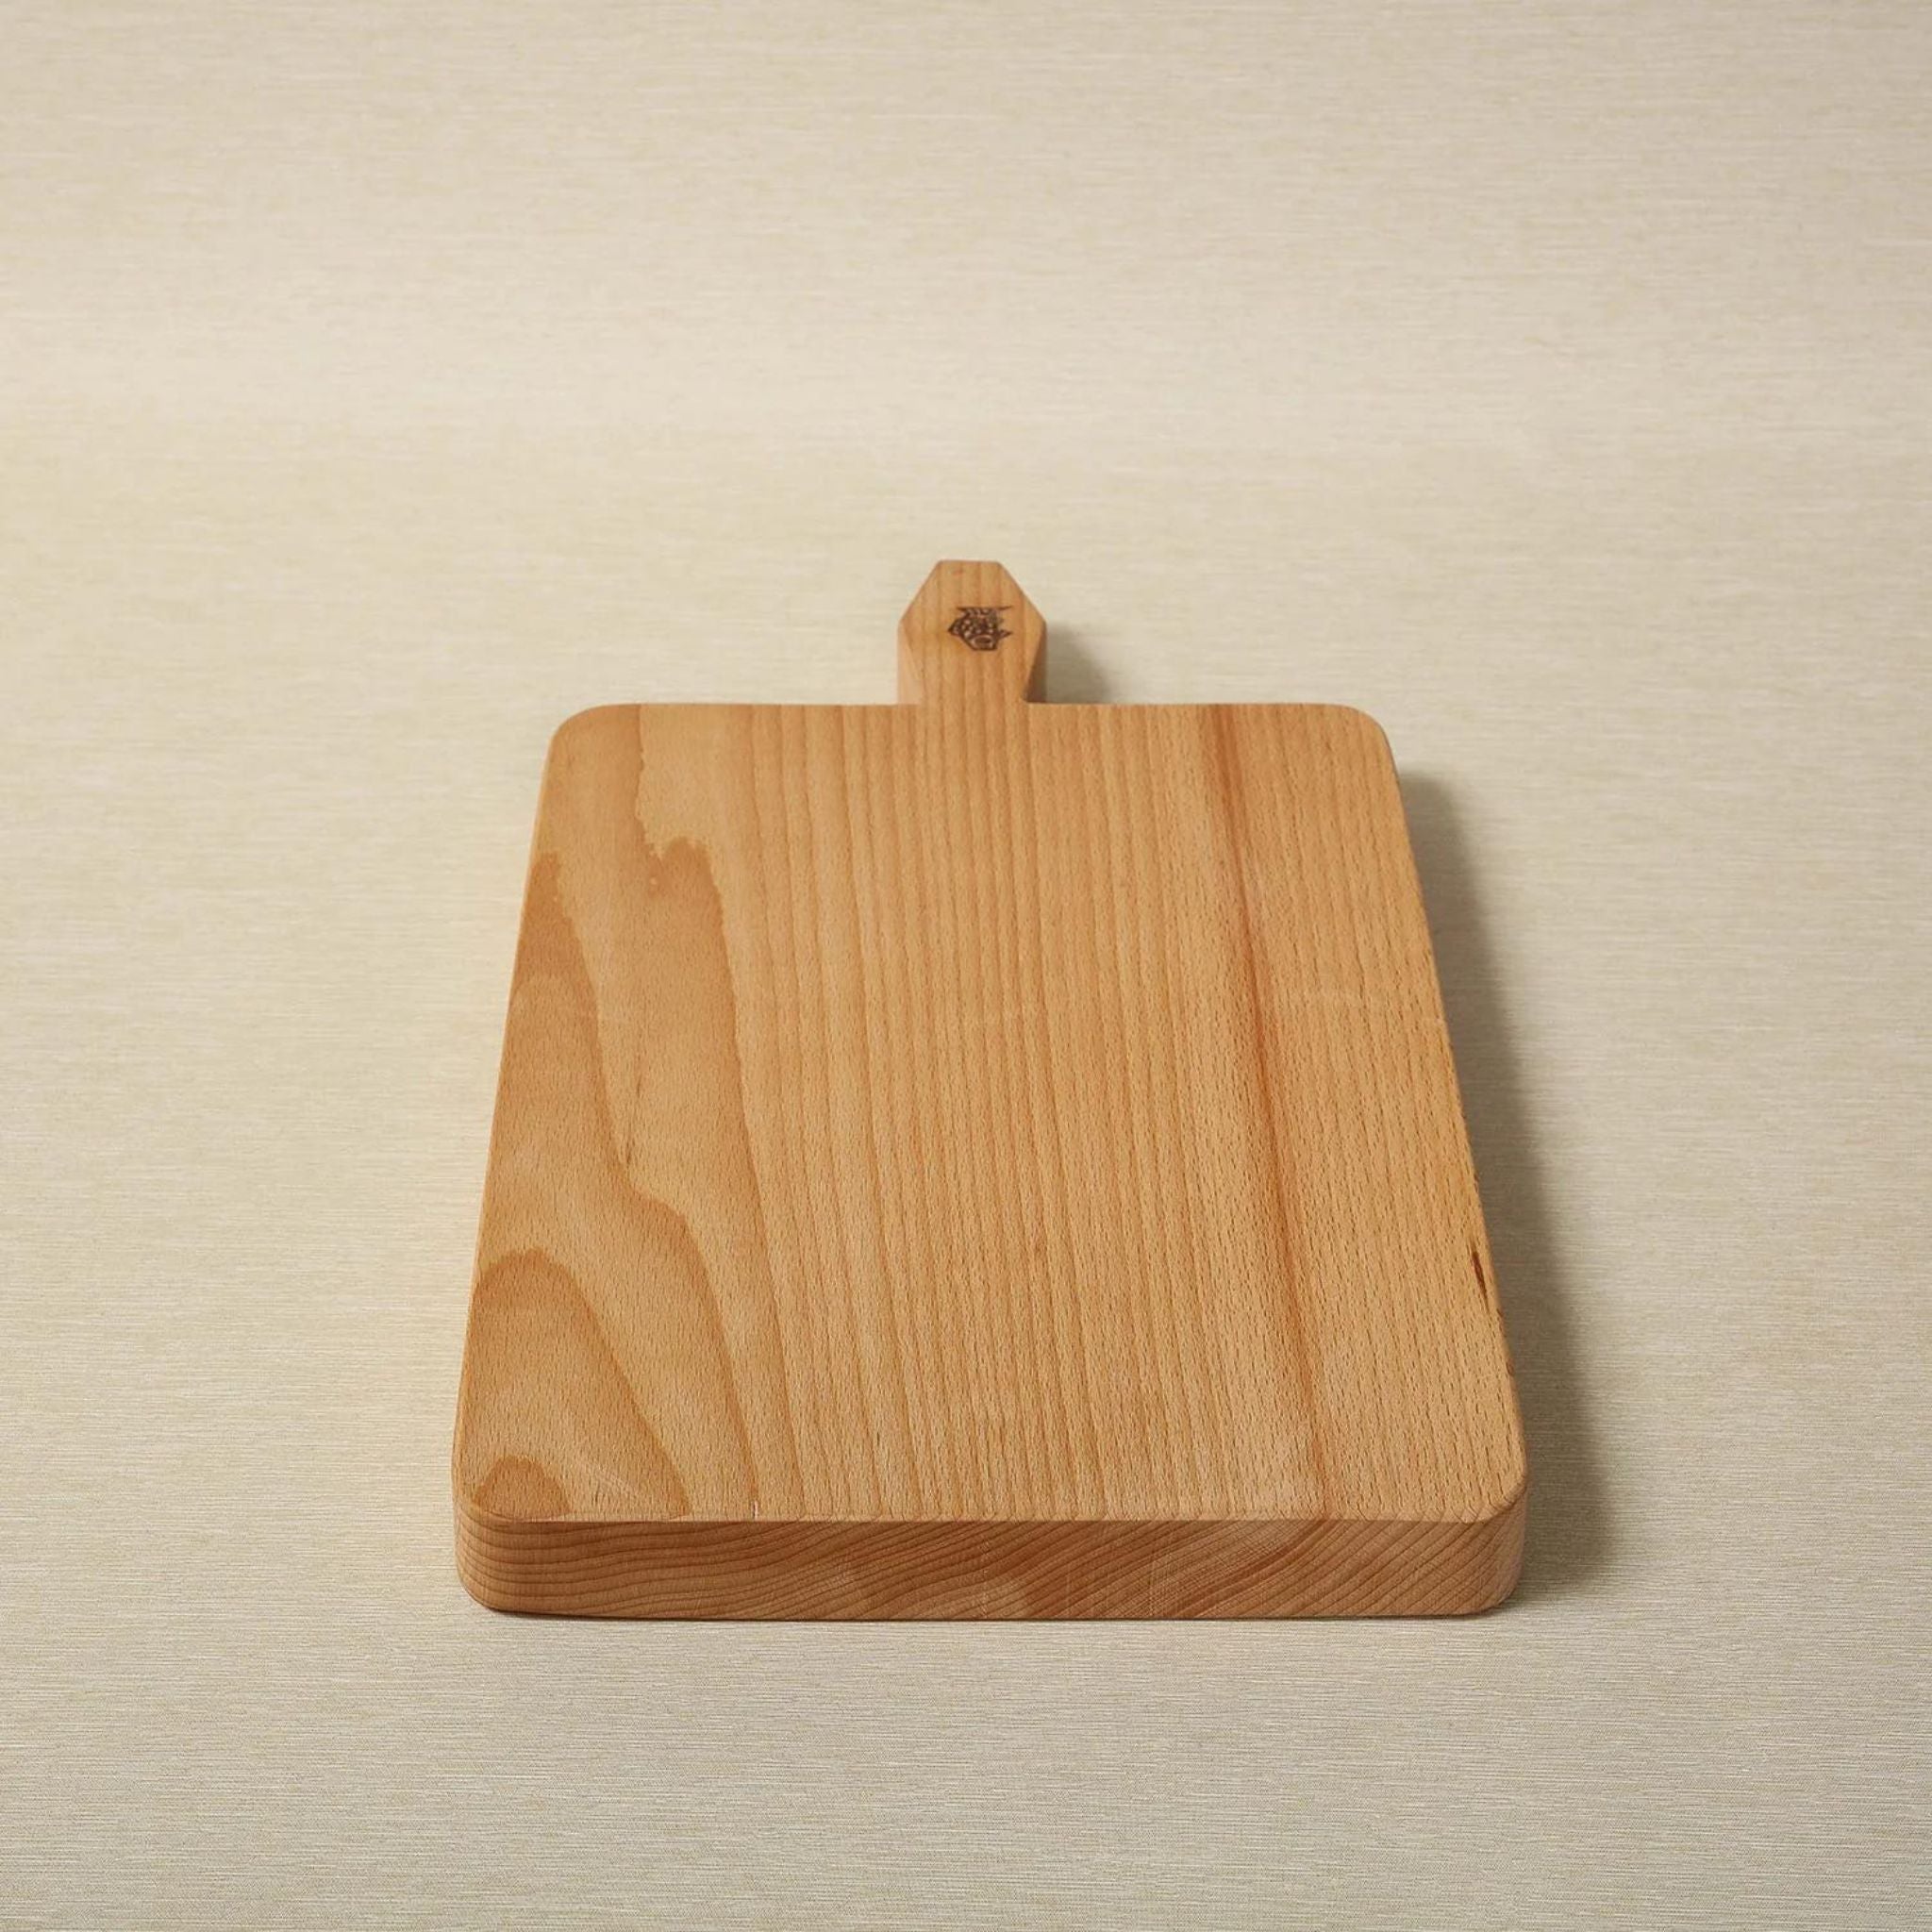 Simply Elevated - Madai Large Rectangular Cutting Board Beechwood Cutting Board with Japanese Fish Motif